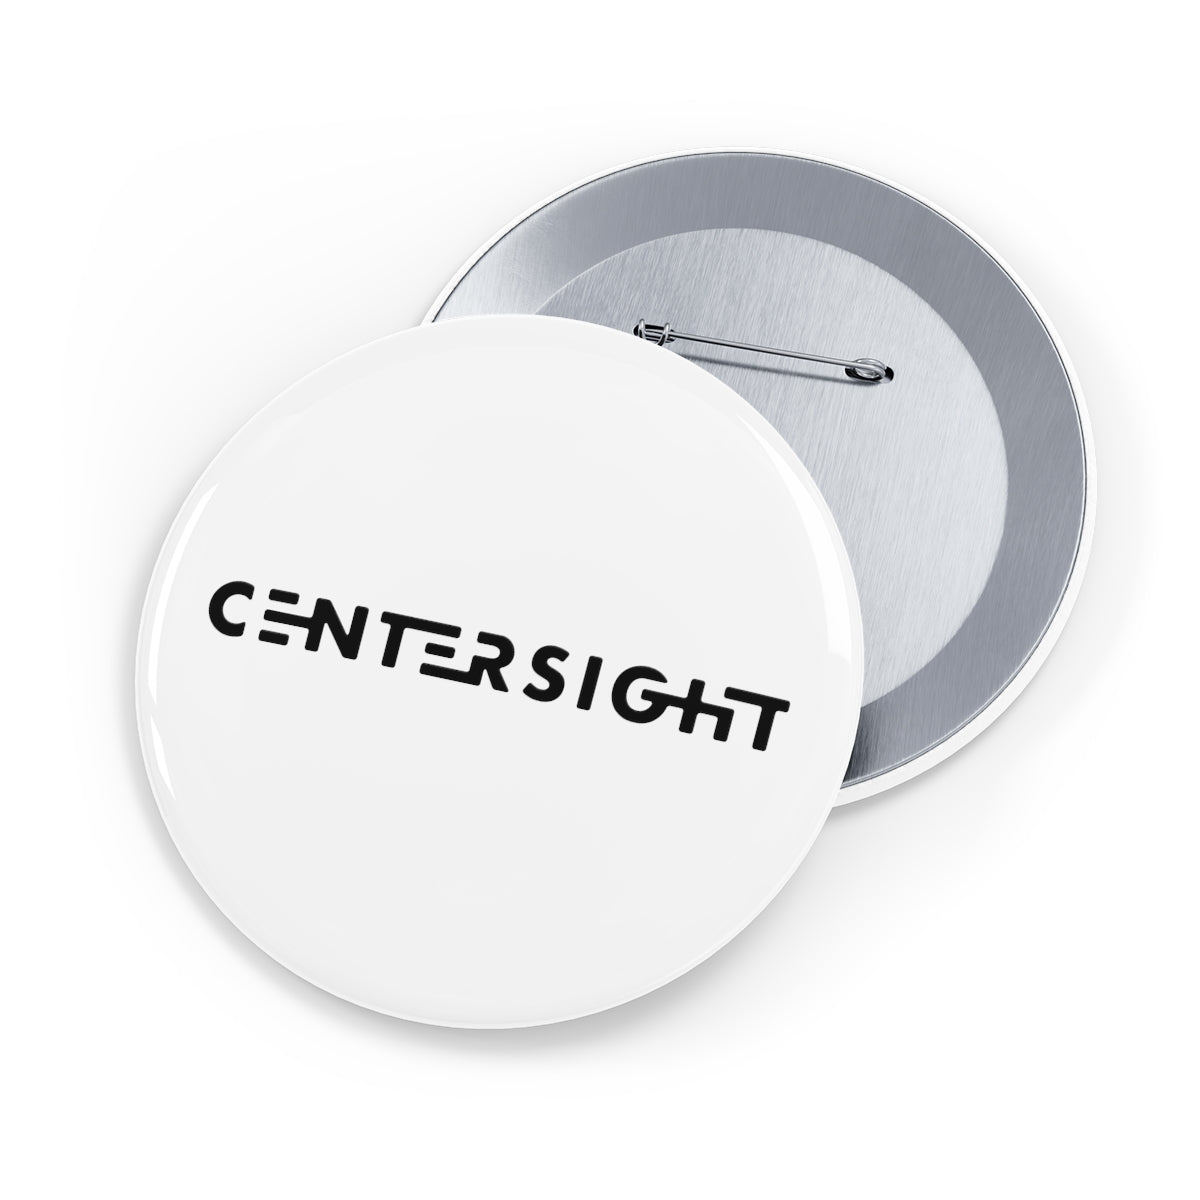 Centersight Pins